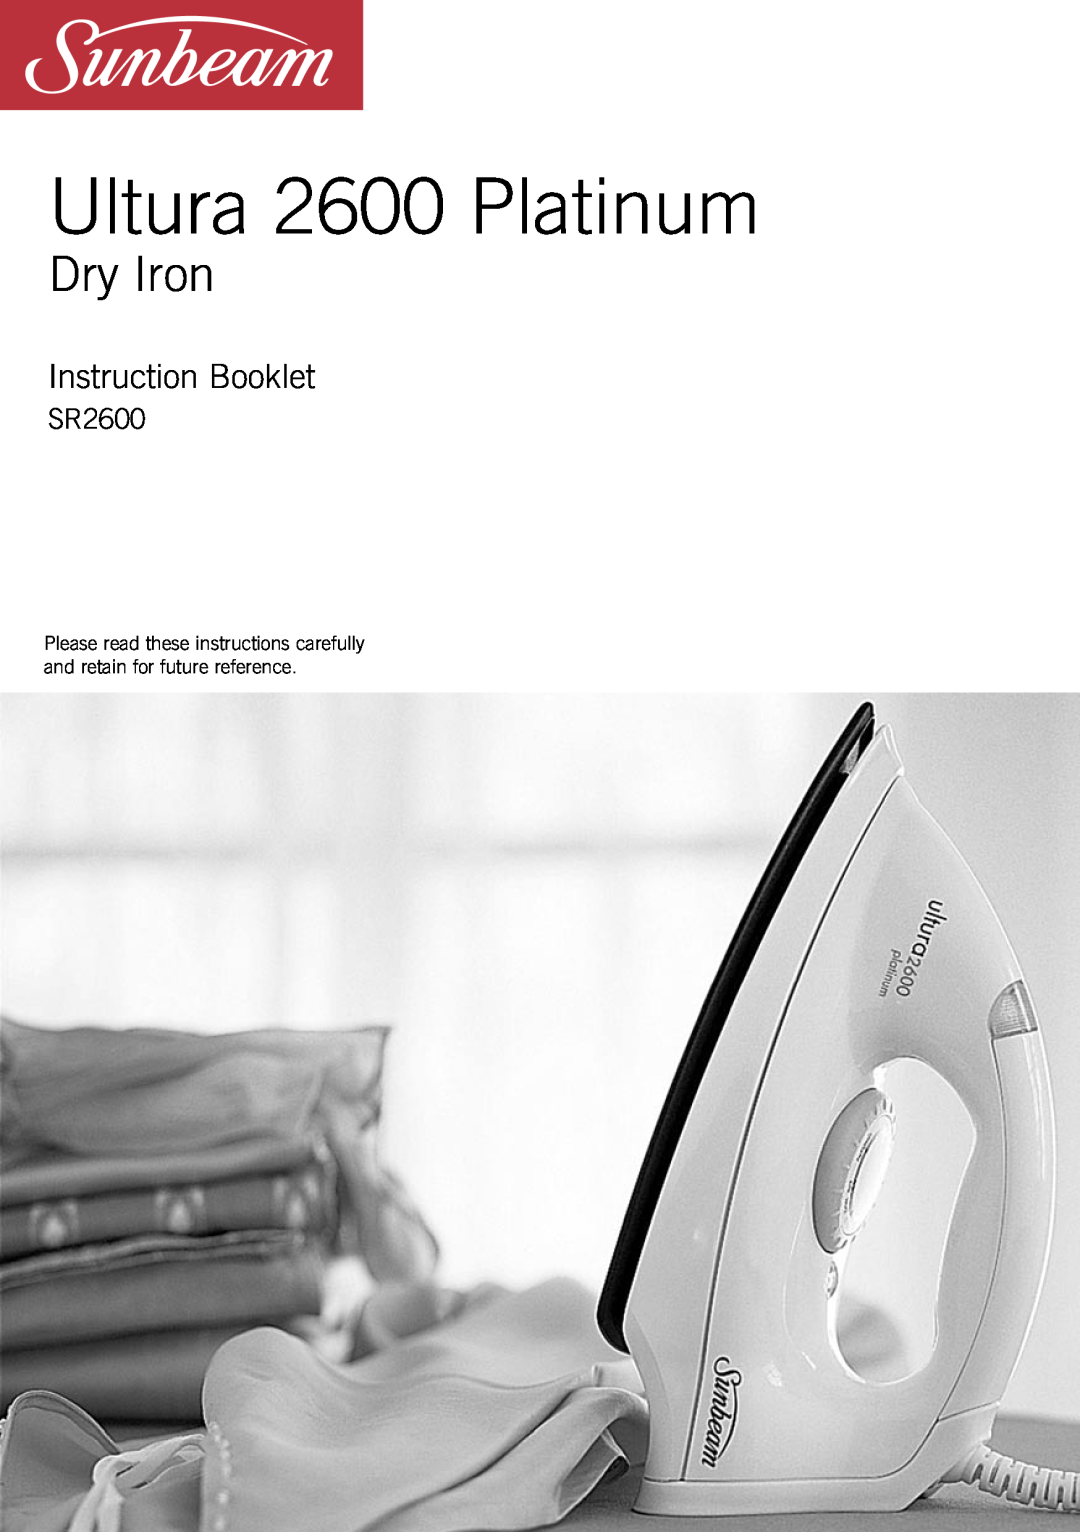 Sunbeam manual Ultura 2600 Platinum, Dry Iron, Instruction Booklet, SR2600 